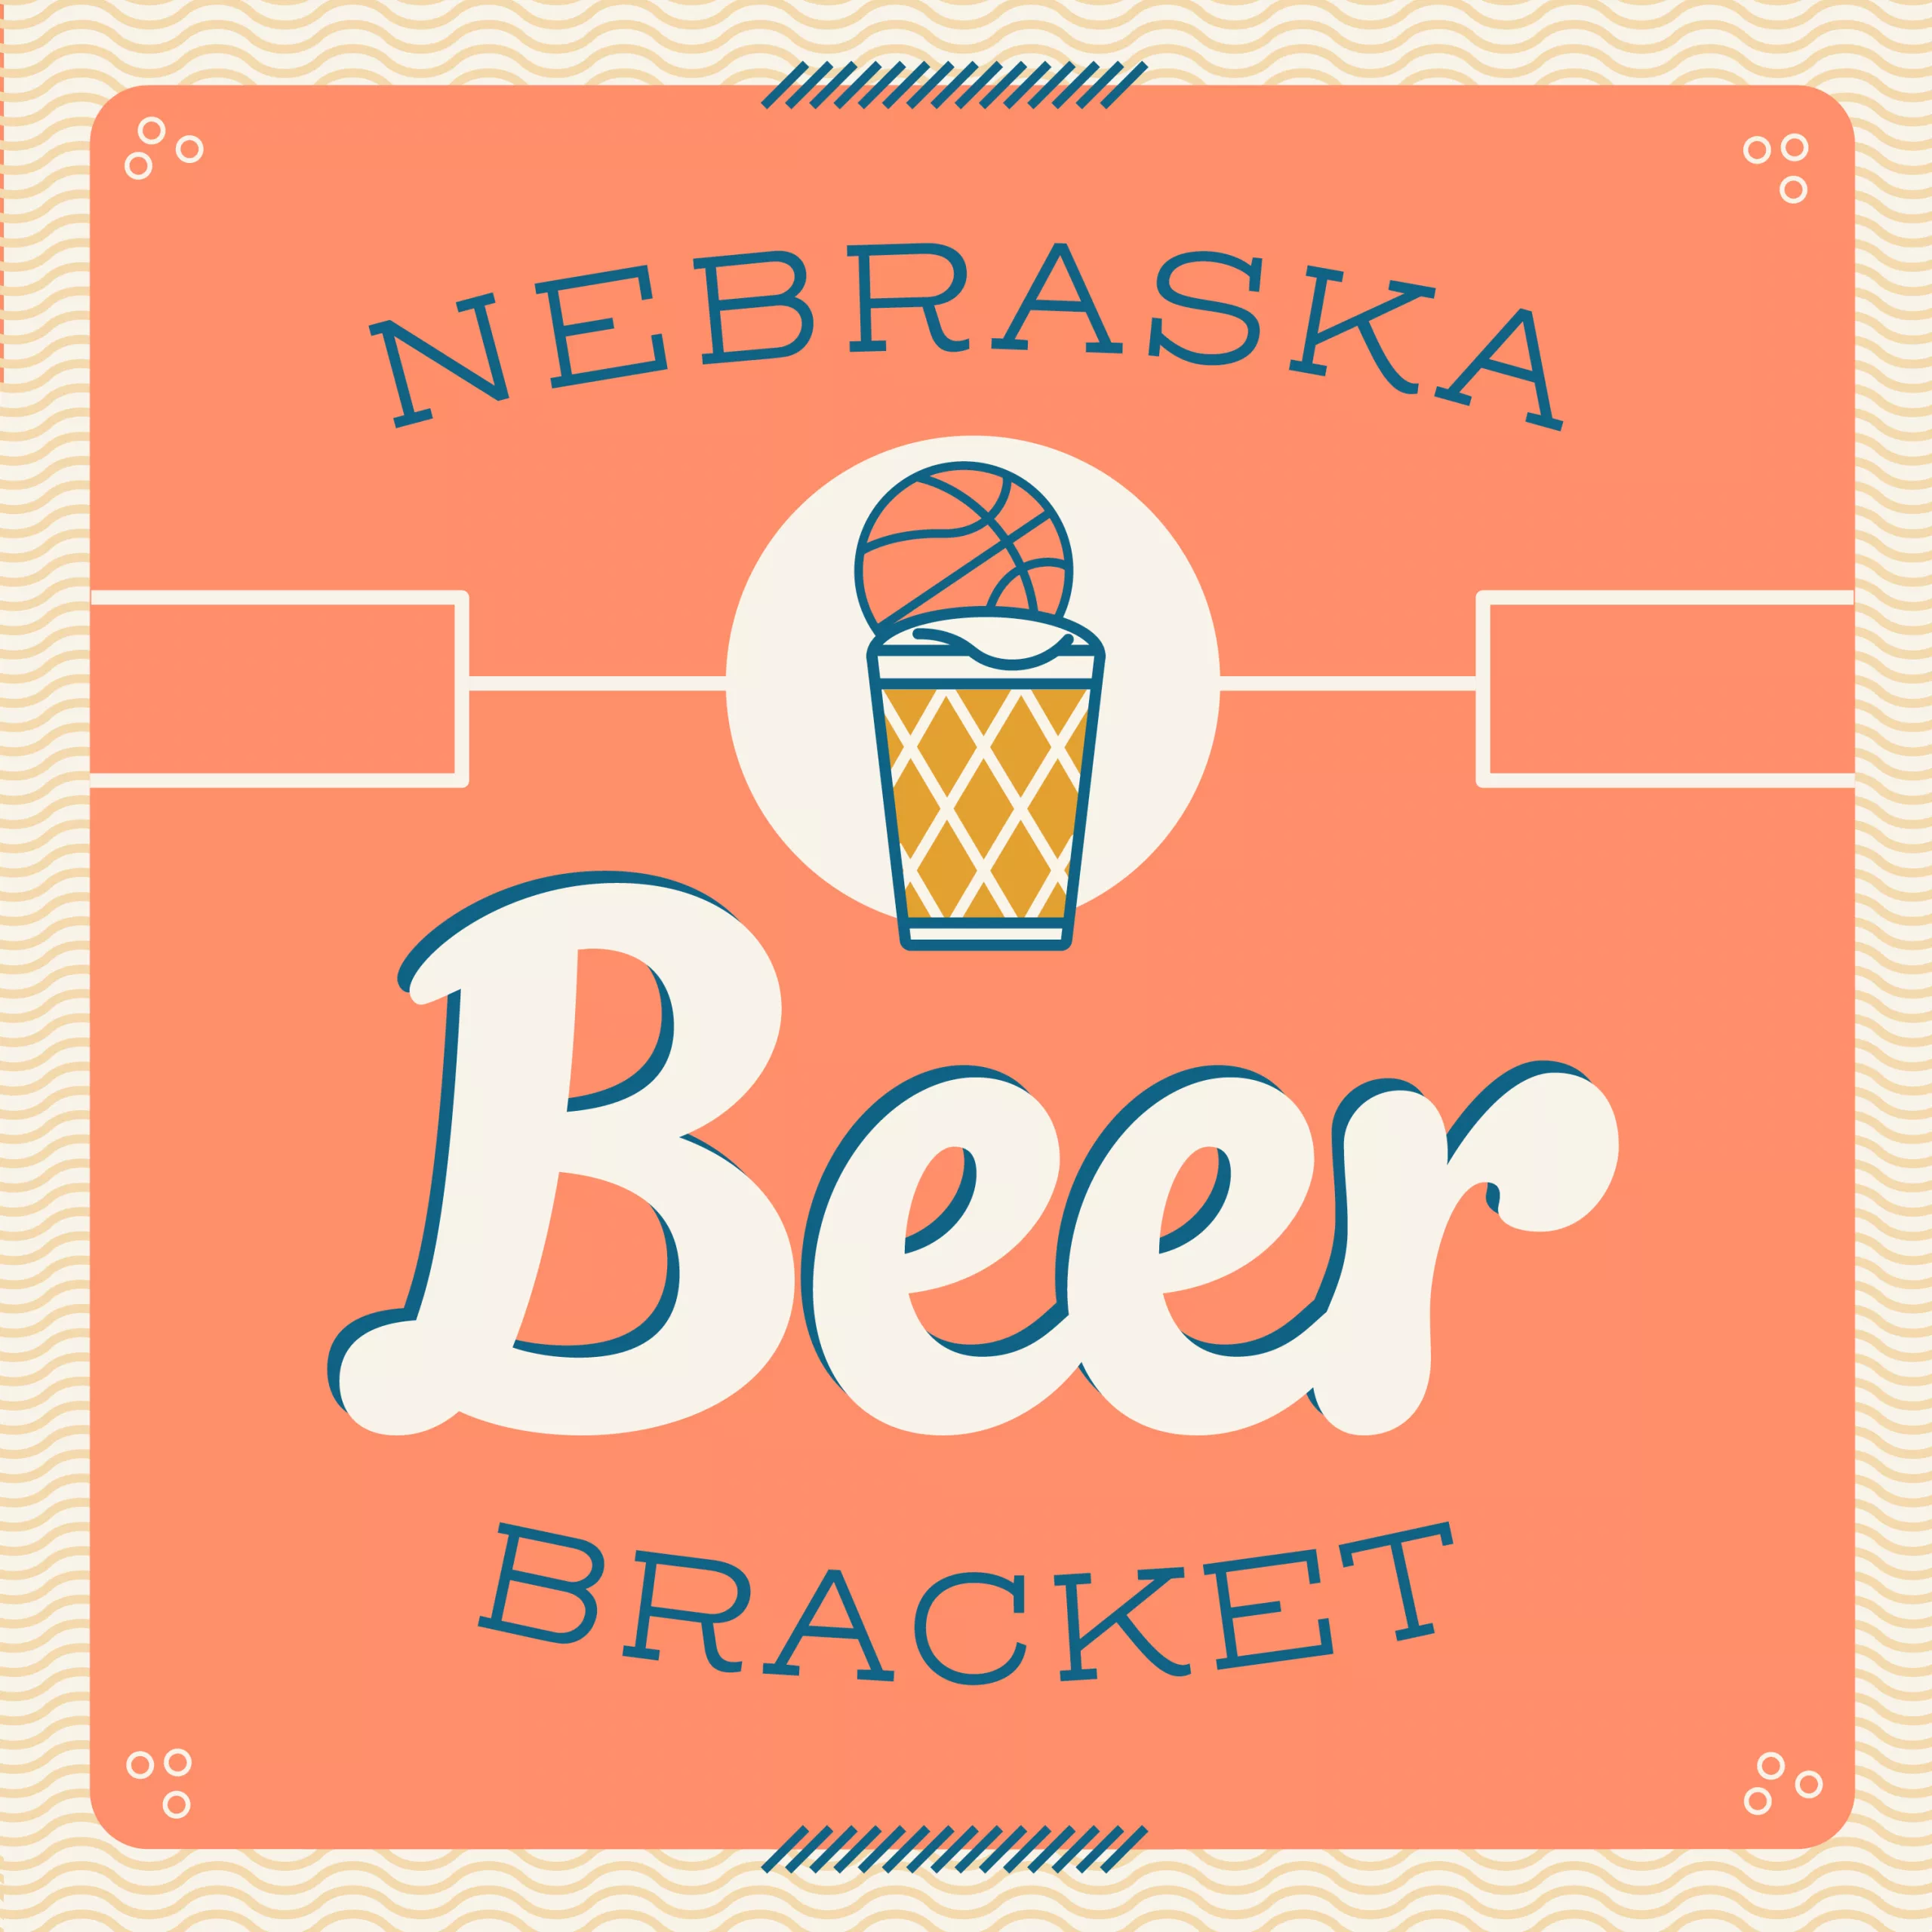 Nebraska Beer Bracket